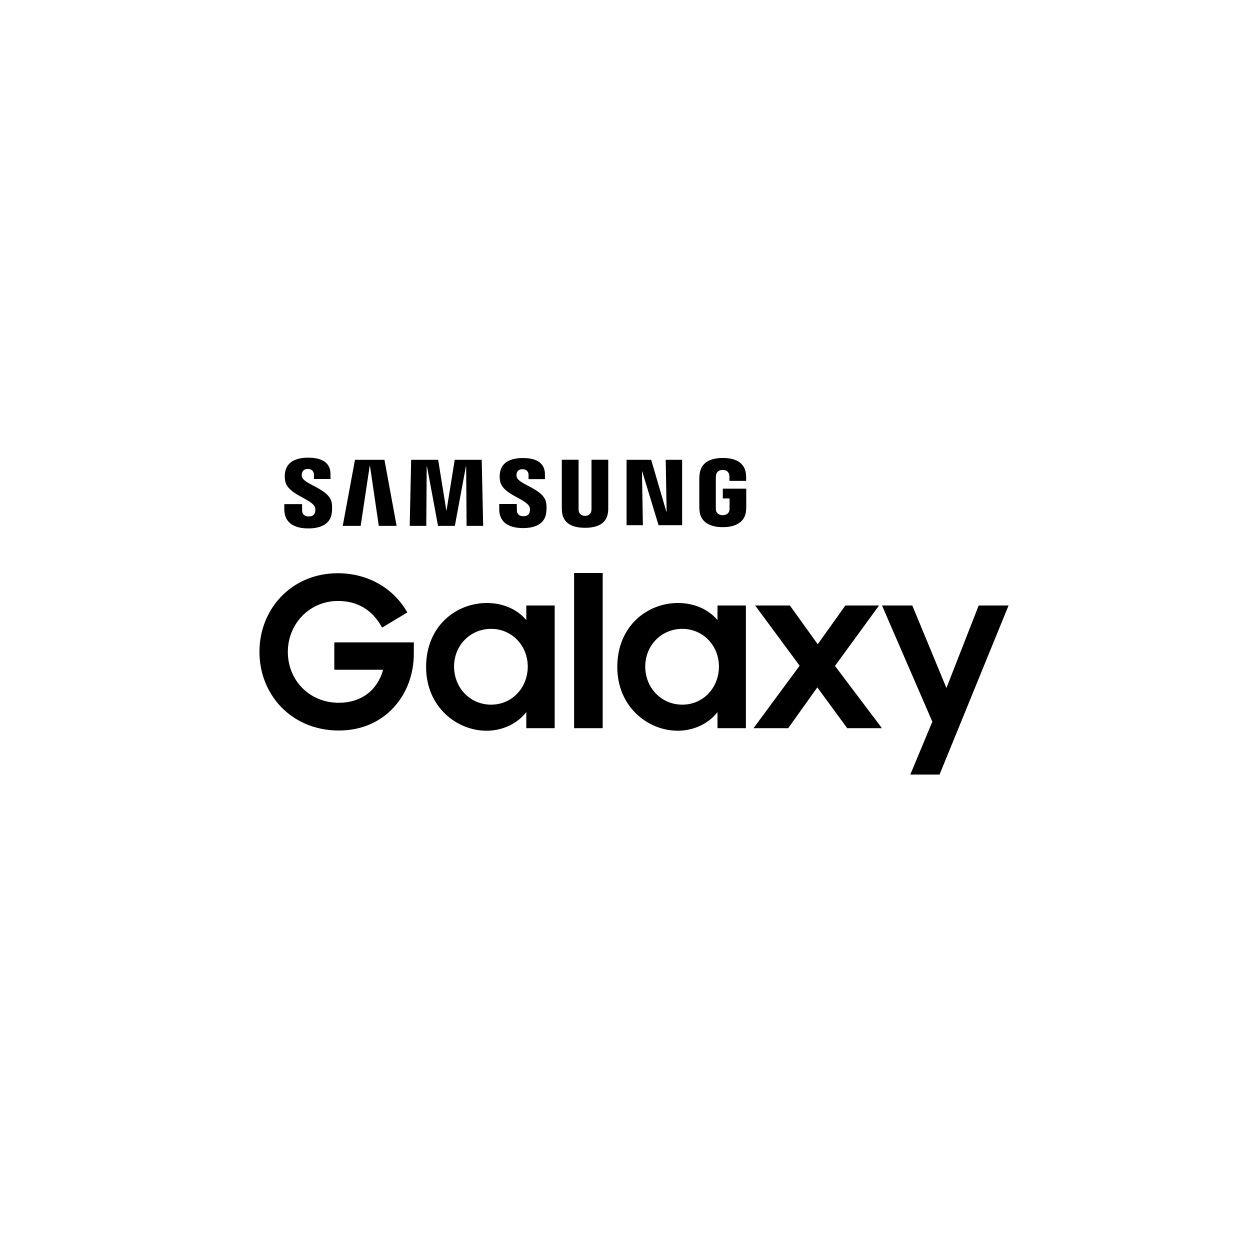 New Samsung 2017 Logo - Unconfined: designing the future